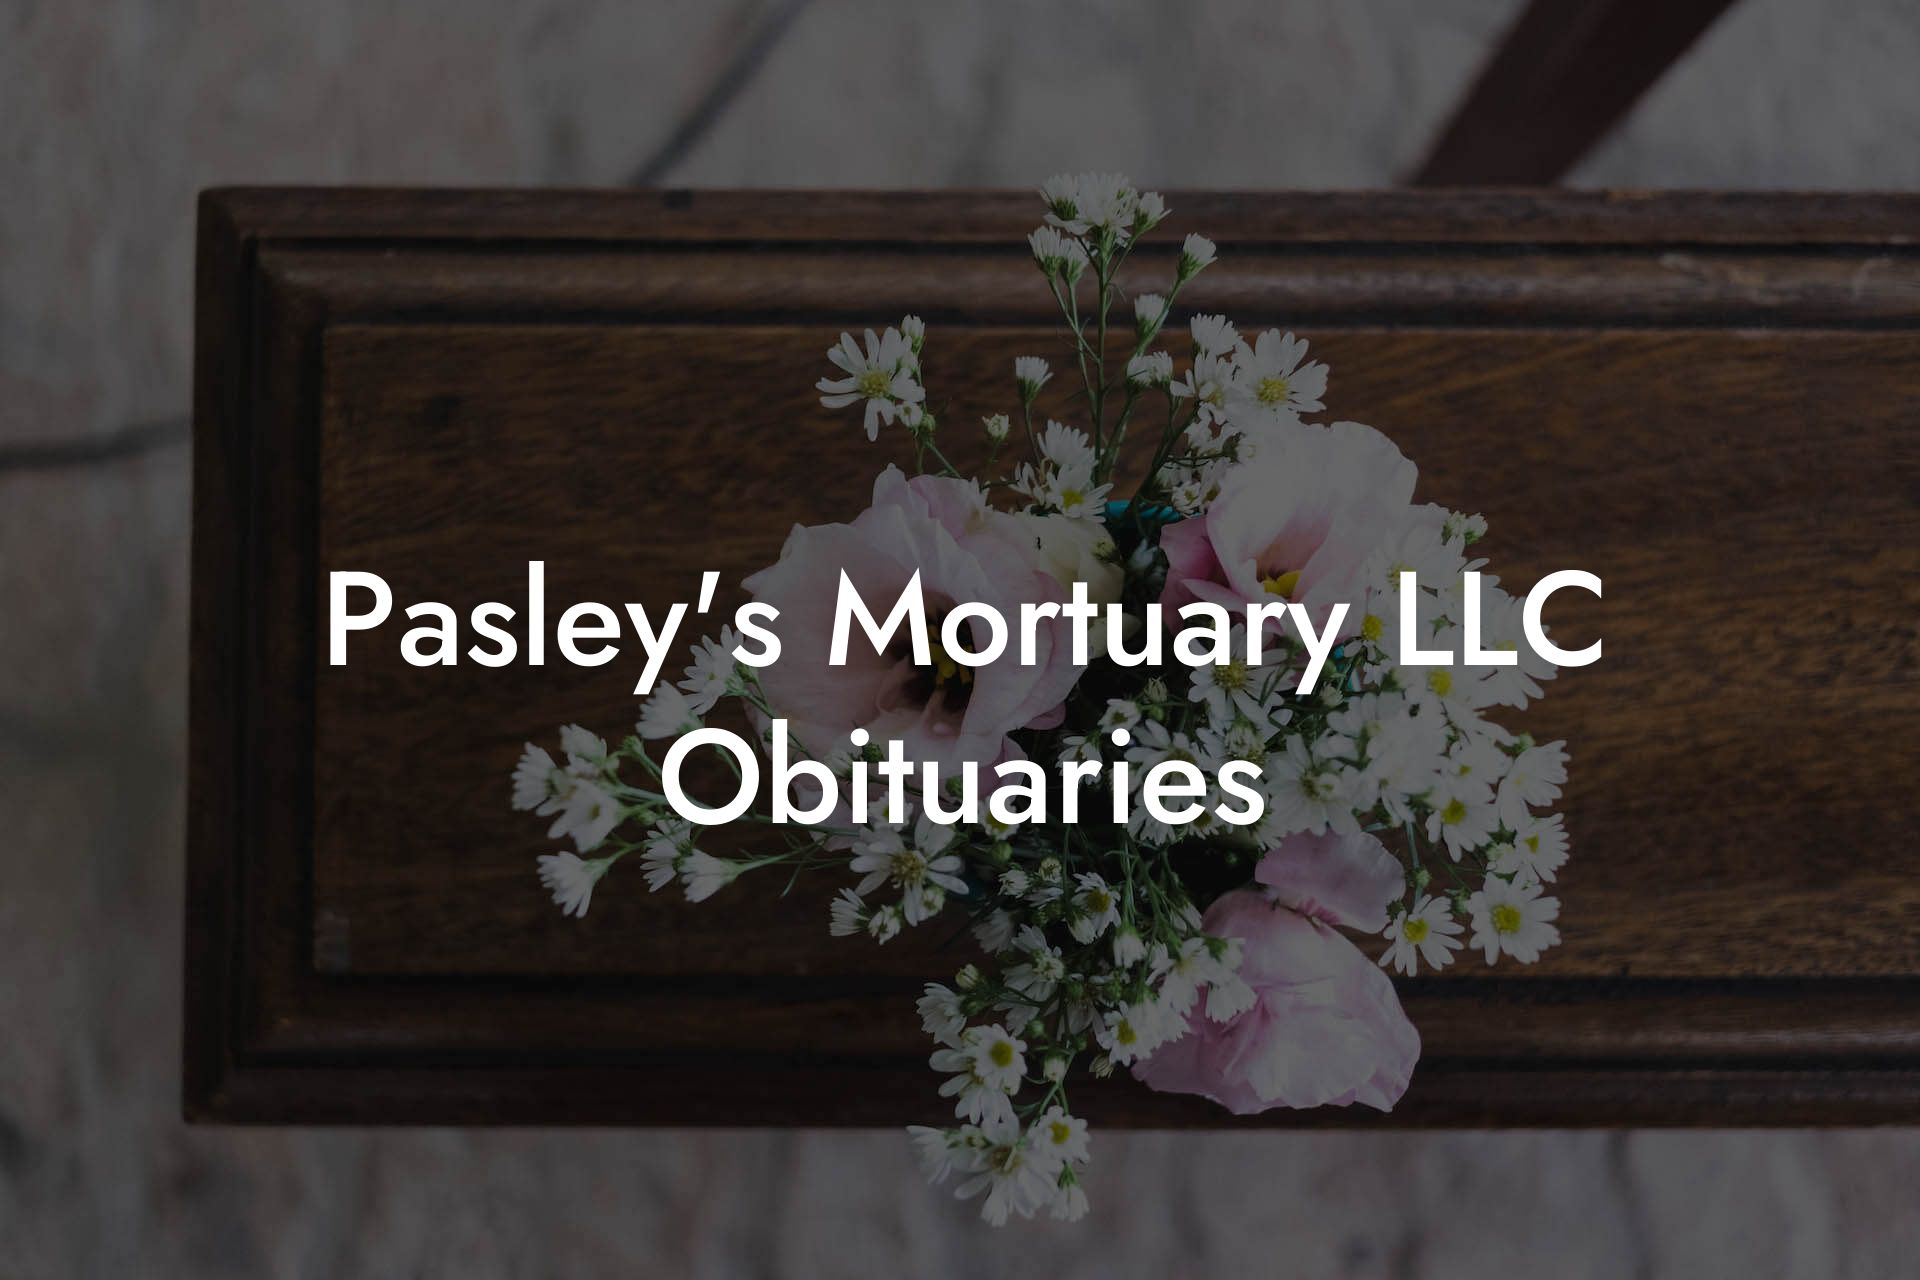 Pasley's Mortuary LLC Obituaries